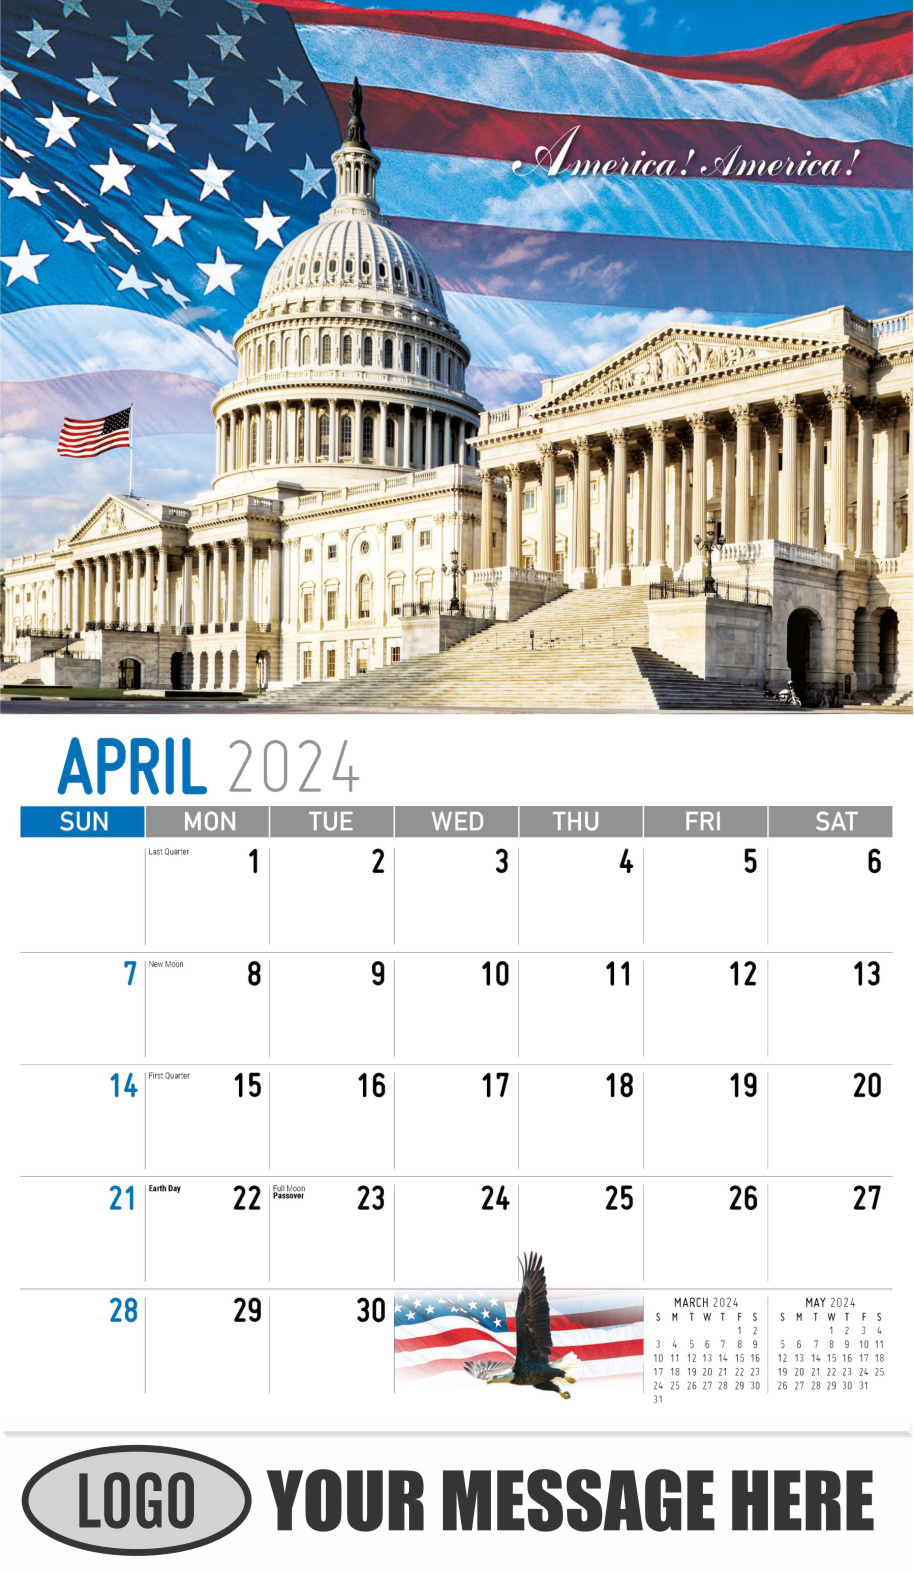 America the Beautiful  2024 Business Advertising Wall Calendar - April